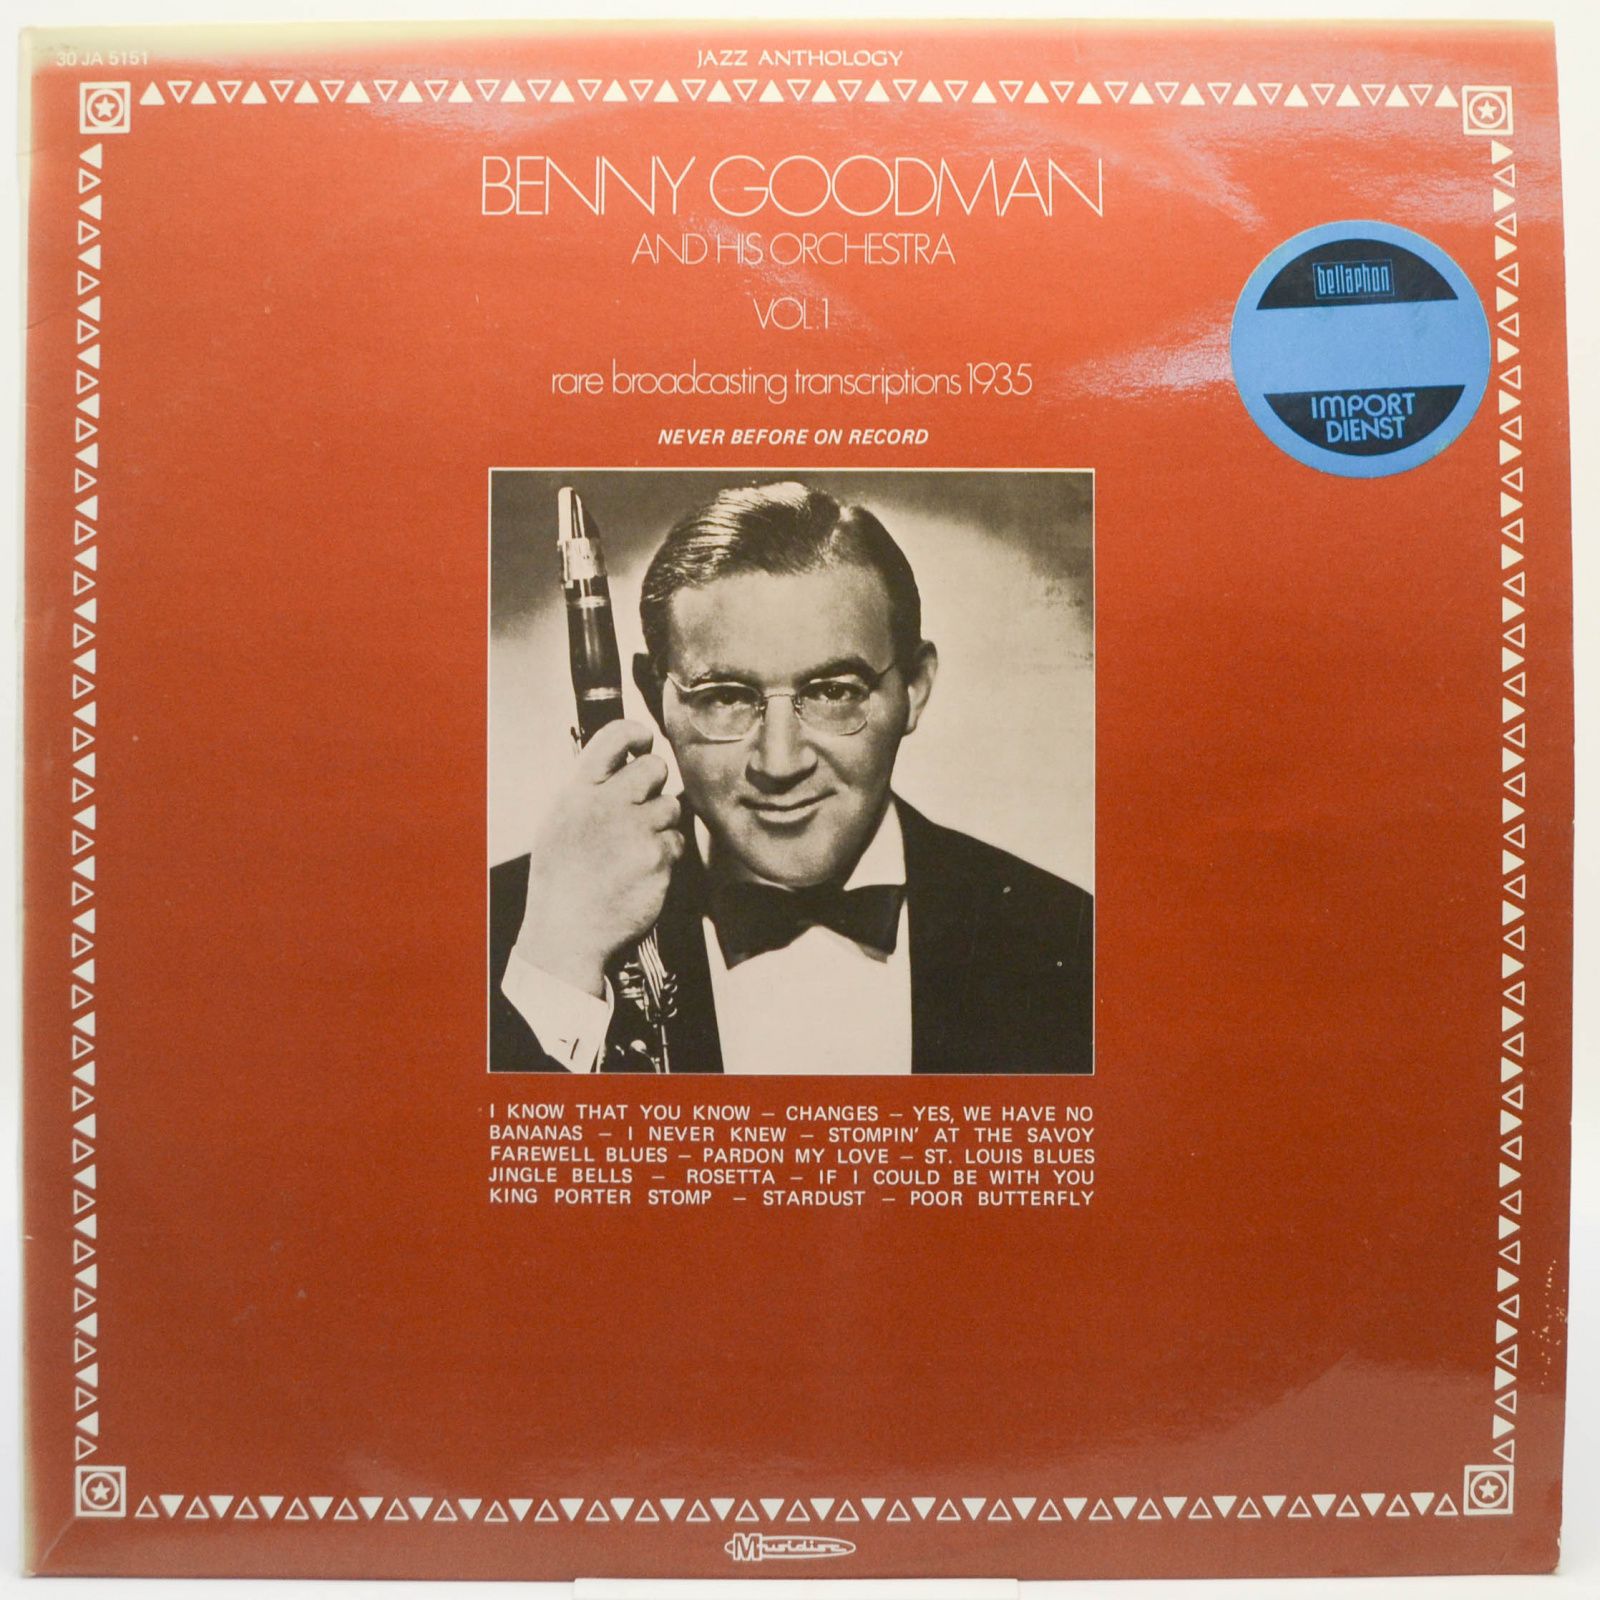 Benny Goodman And His Orchestra — Rare Broadcasting Transcriptions 1935 Vol. 1, 1975